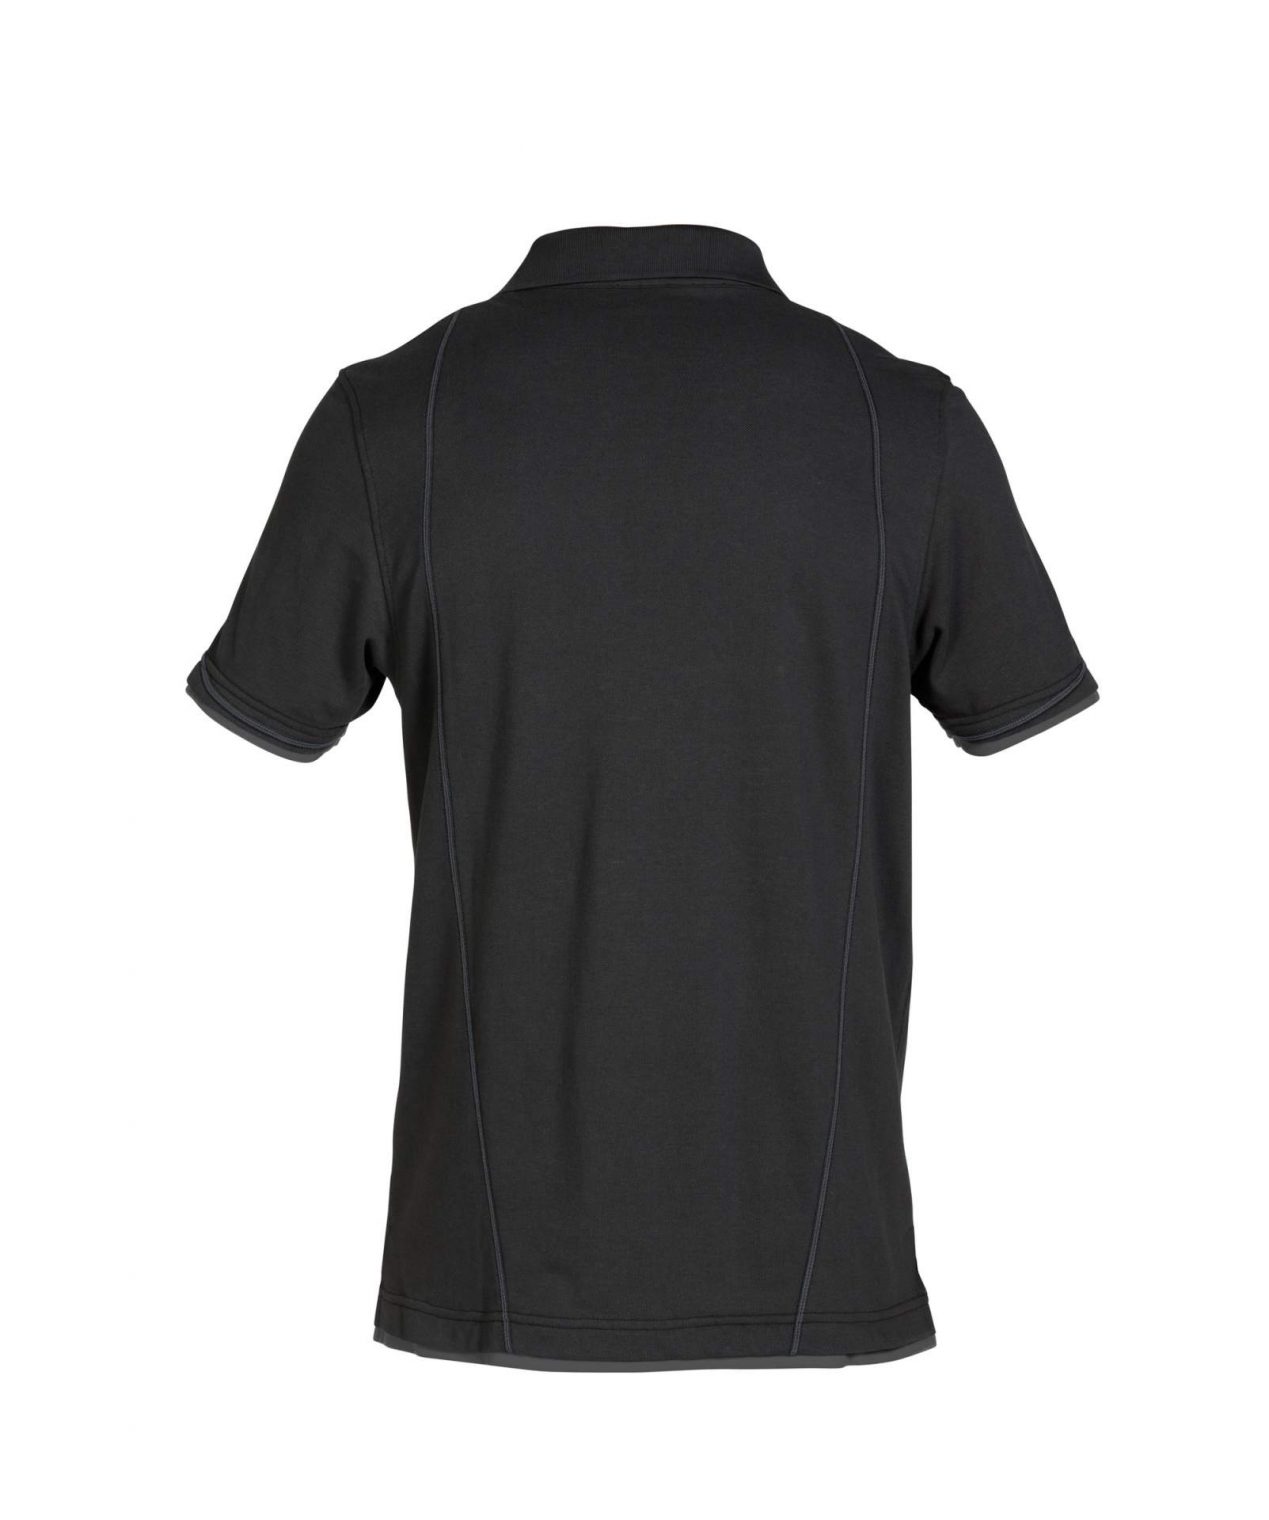 orbital polo shirt black anthracite grey back